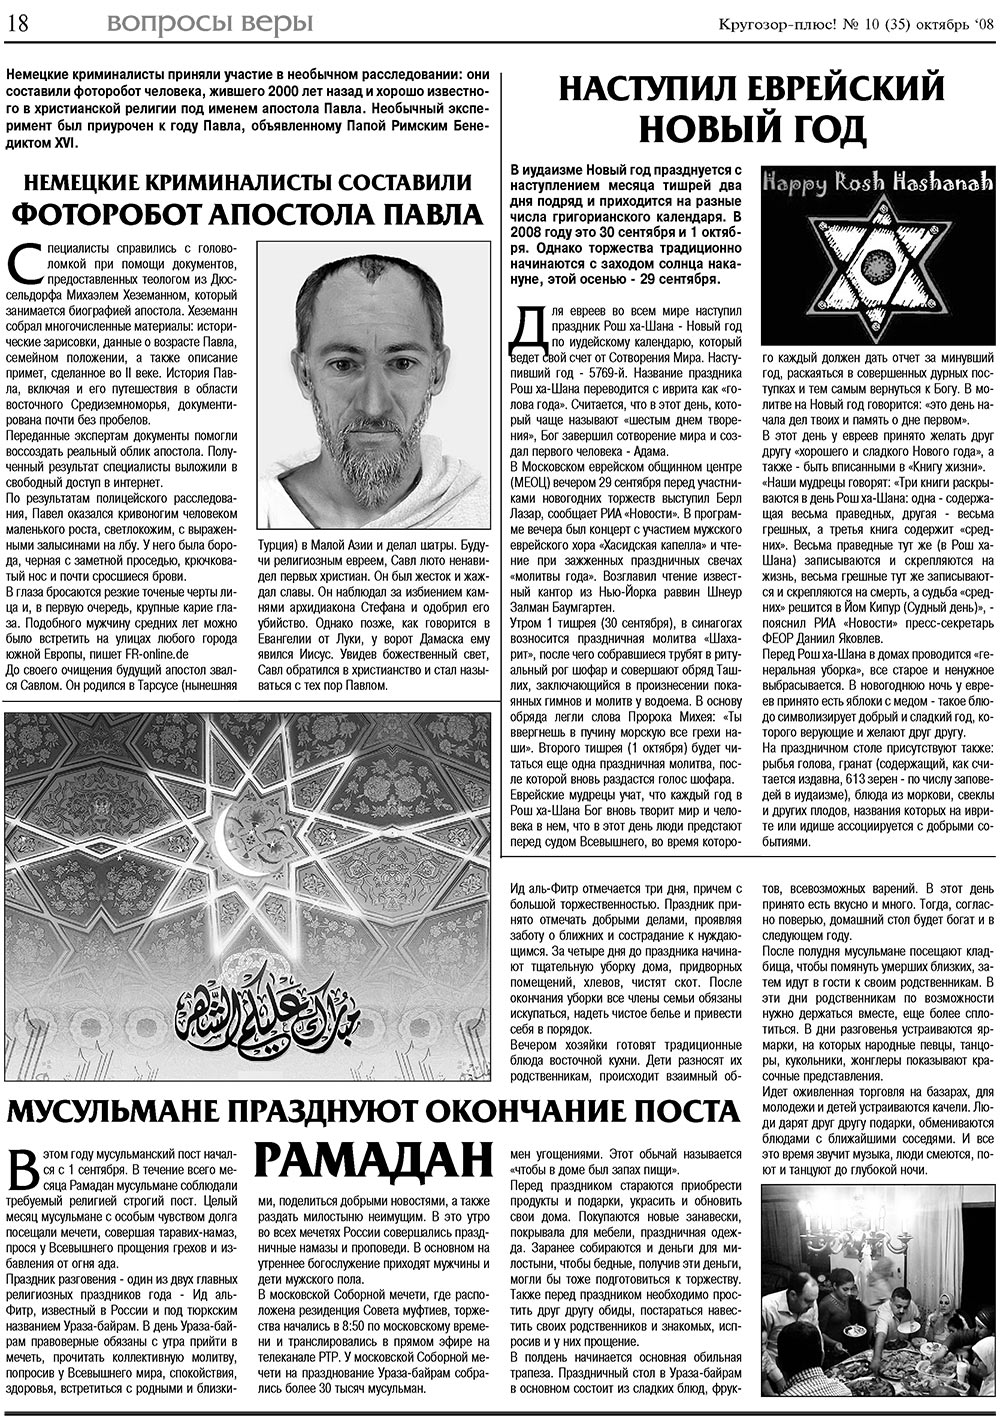 Кругозор плюс! (газета). 2008 год, номер 10, стр. 18